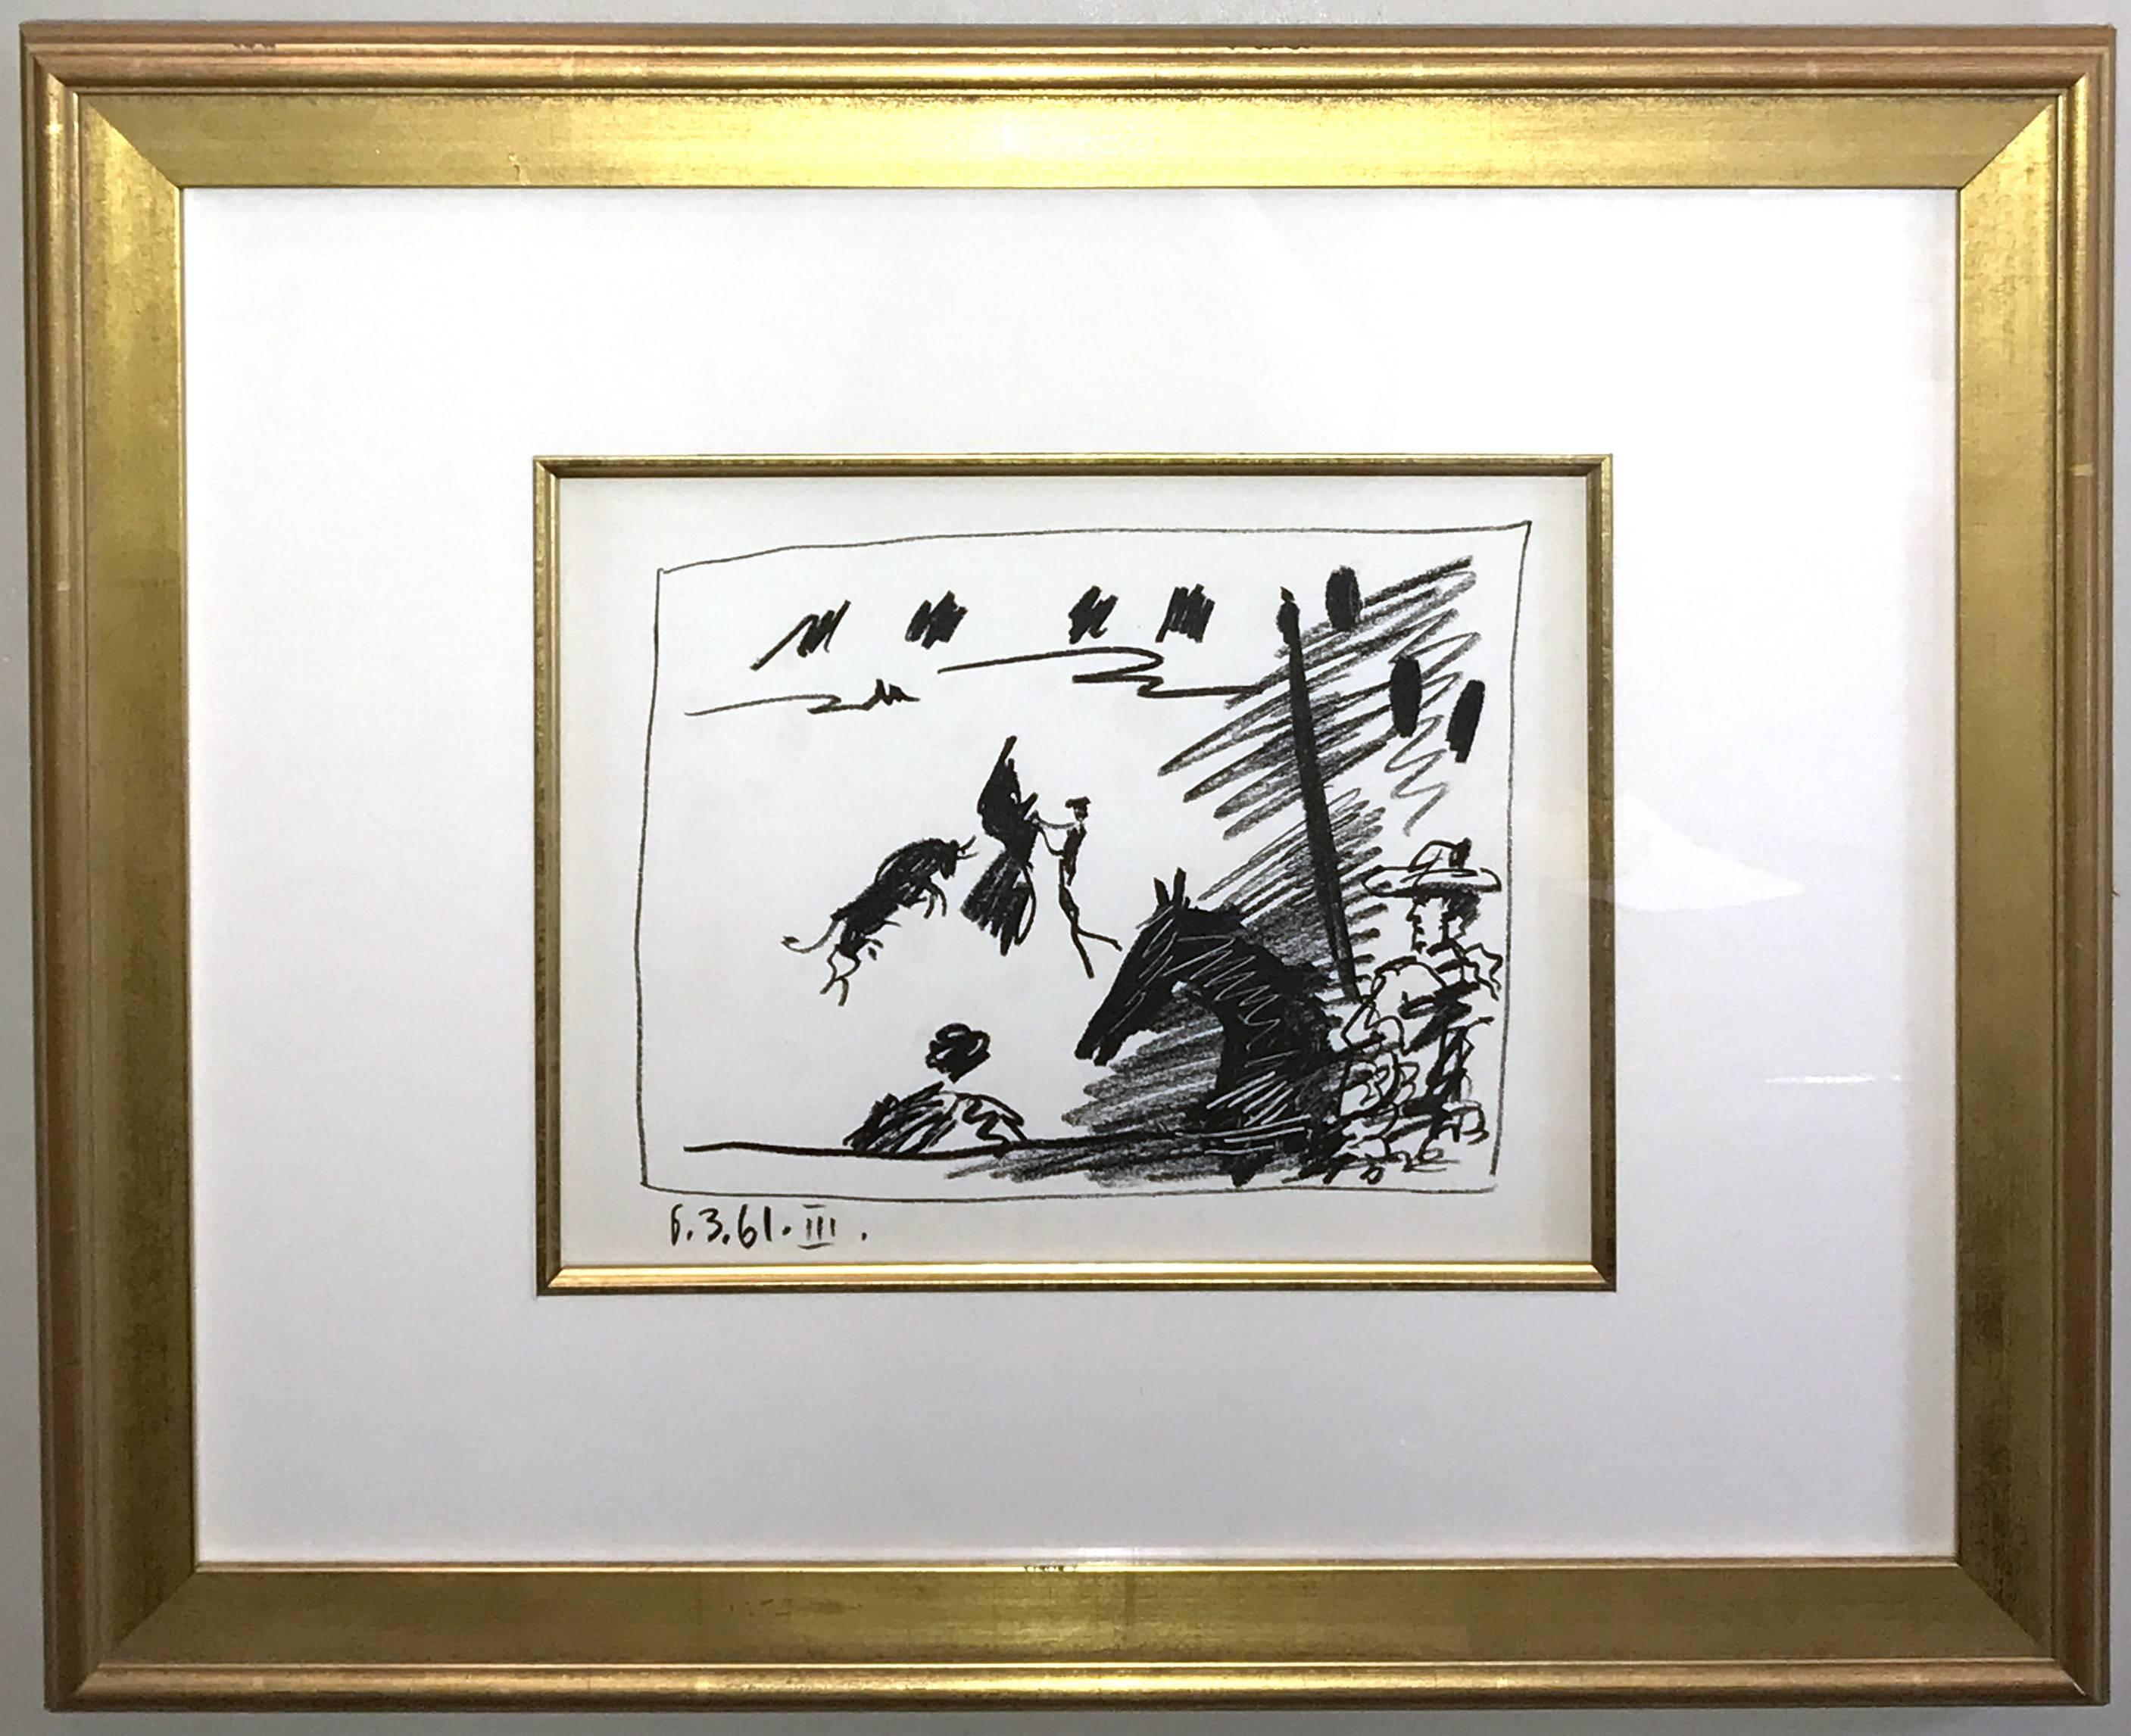 Jeu de la Cape (III), from A Los Toros Avec Picasso - Print by Pablo Picasso